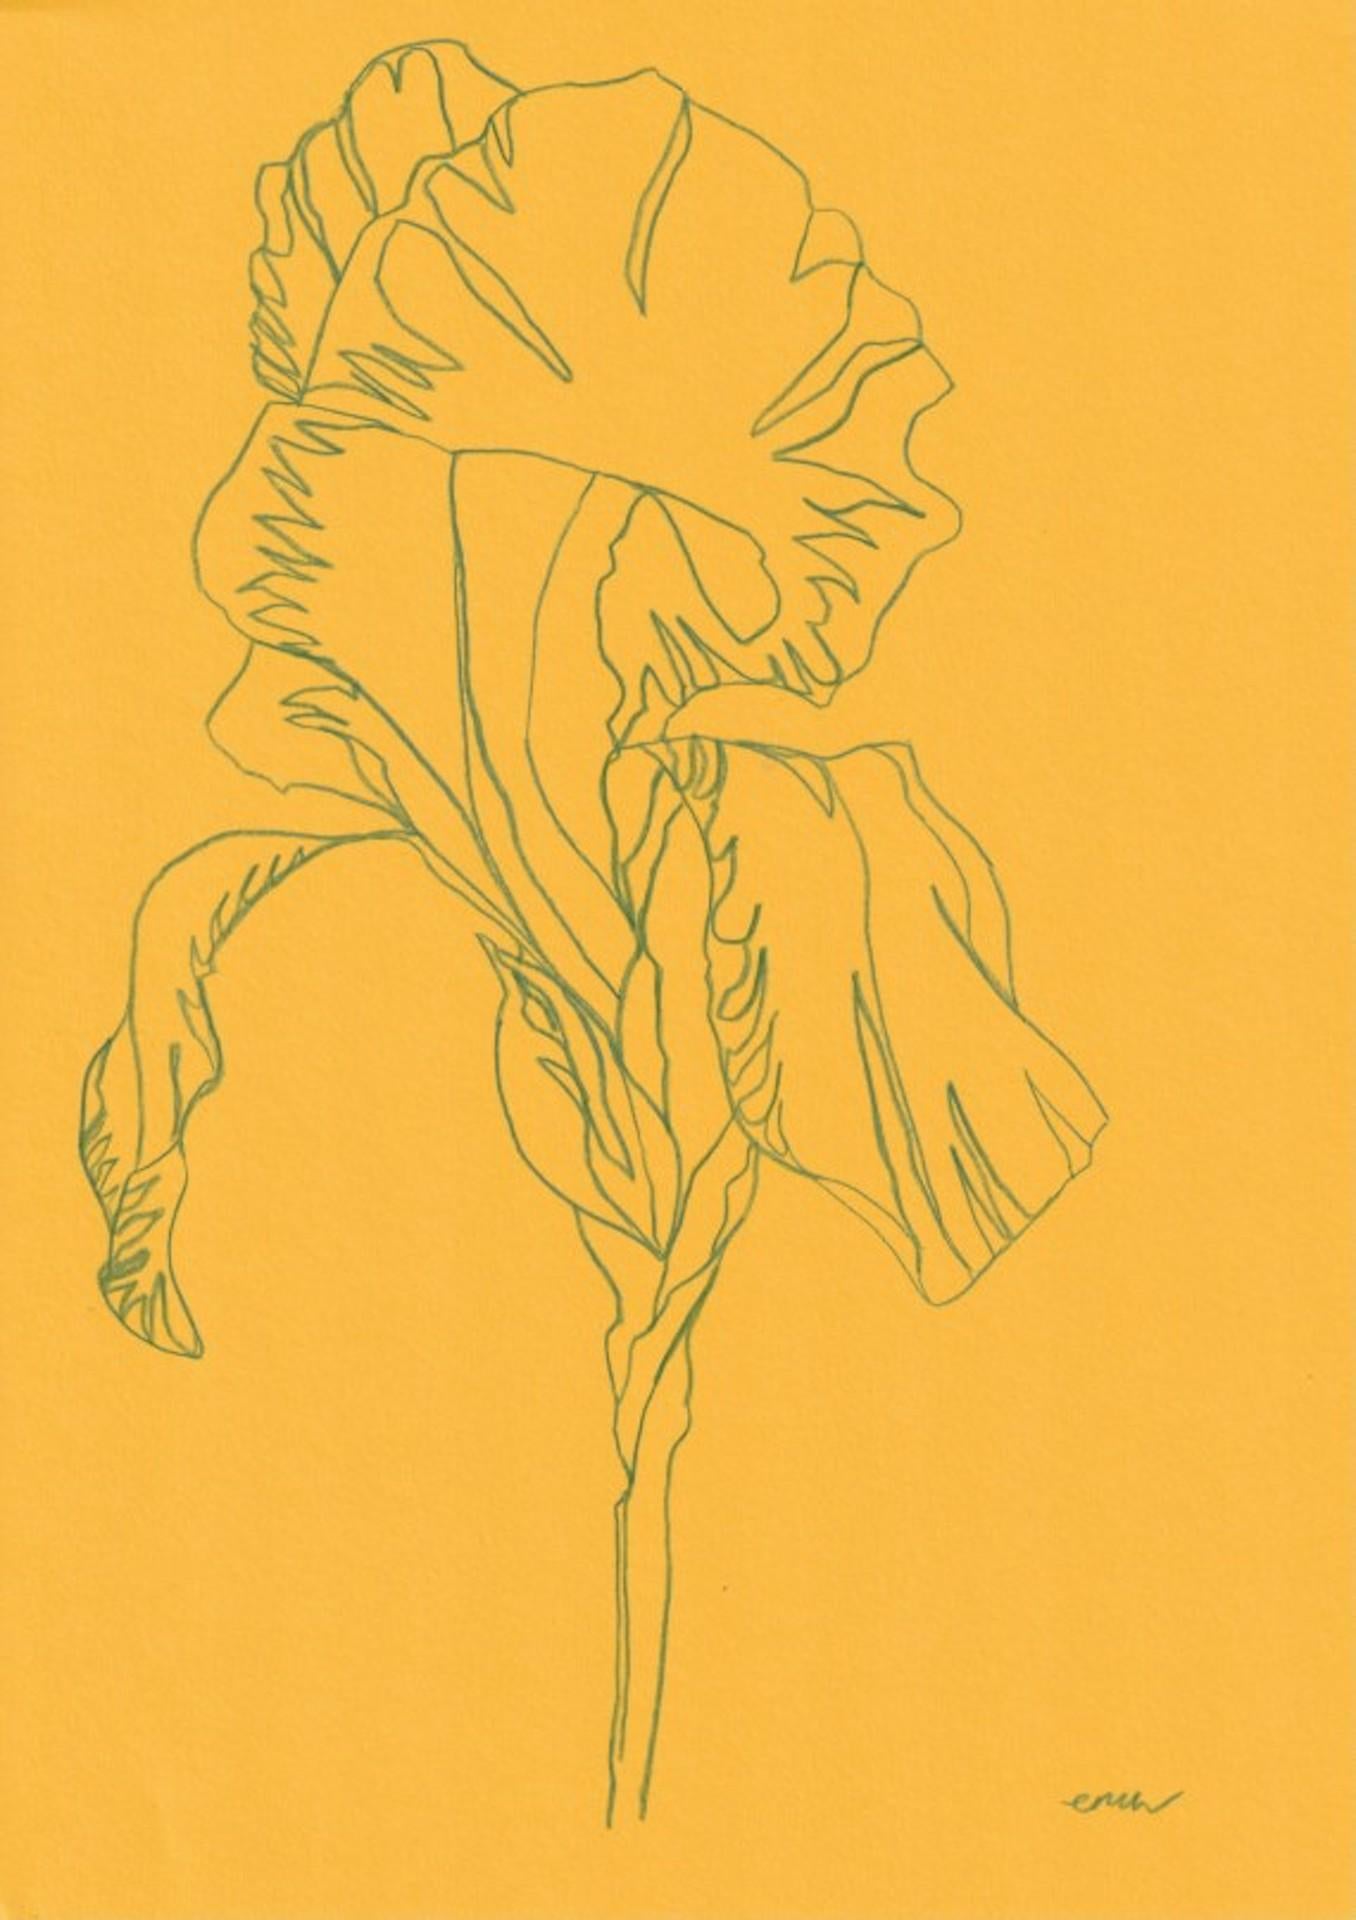 Portrait Ellen Williams - Iris 5, Ellen William, dessin original au crayon, nature morte florale minimaliste